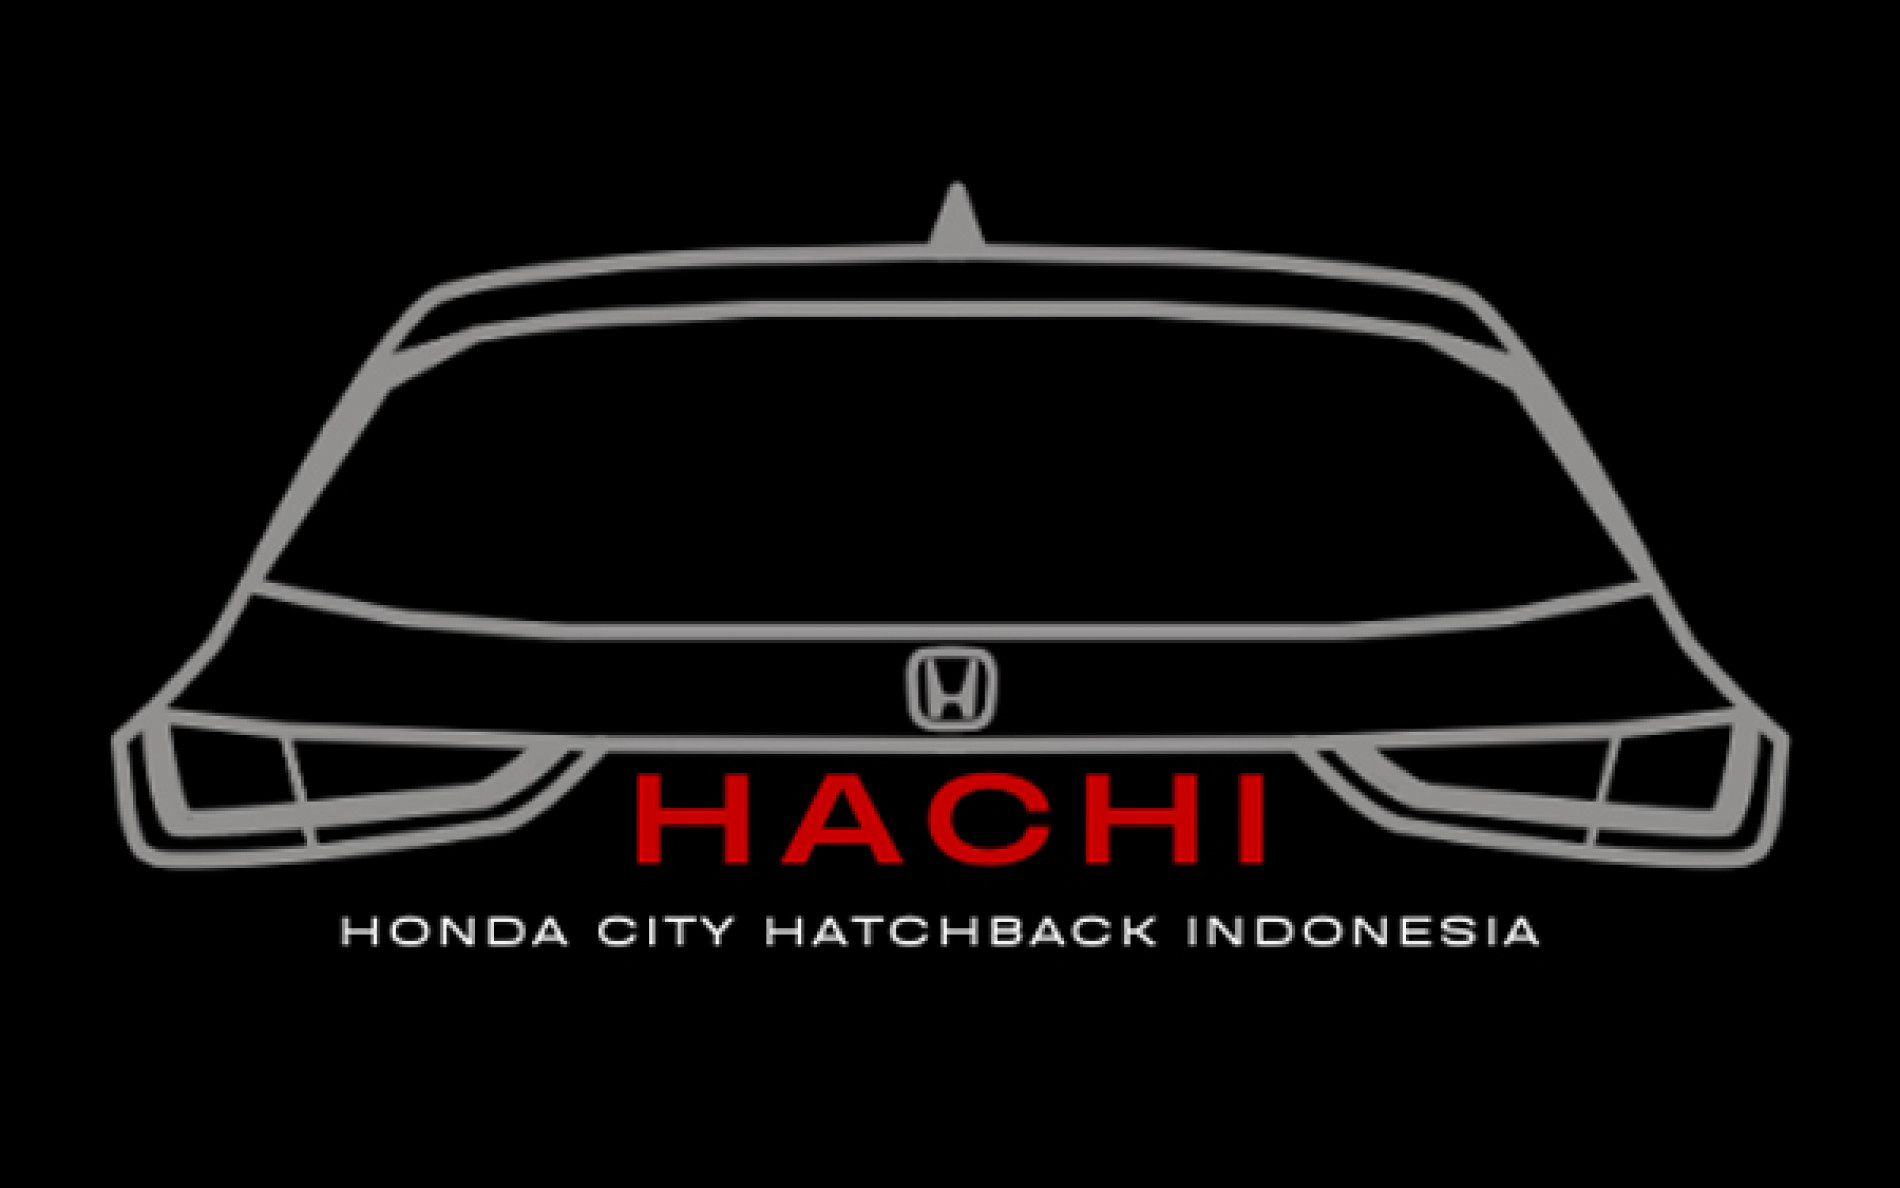 Honda City Hatchback Indonesia (HACHI)